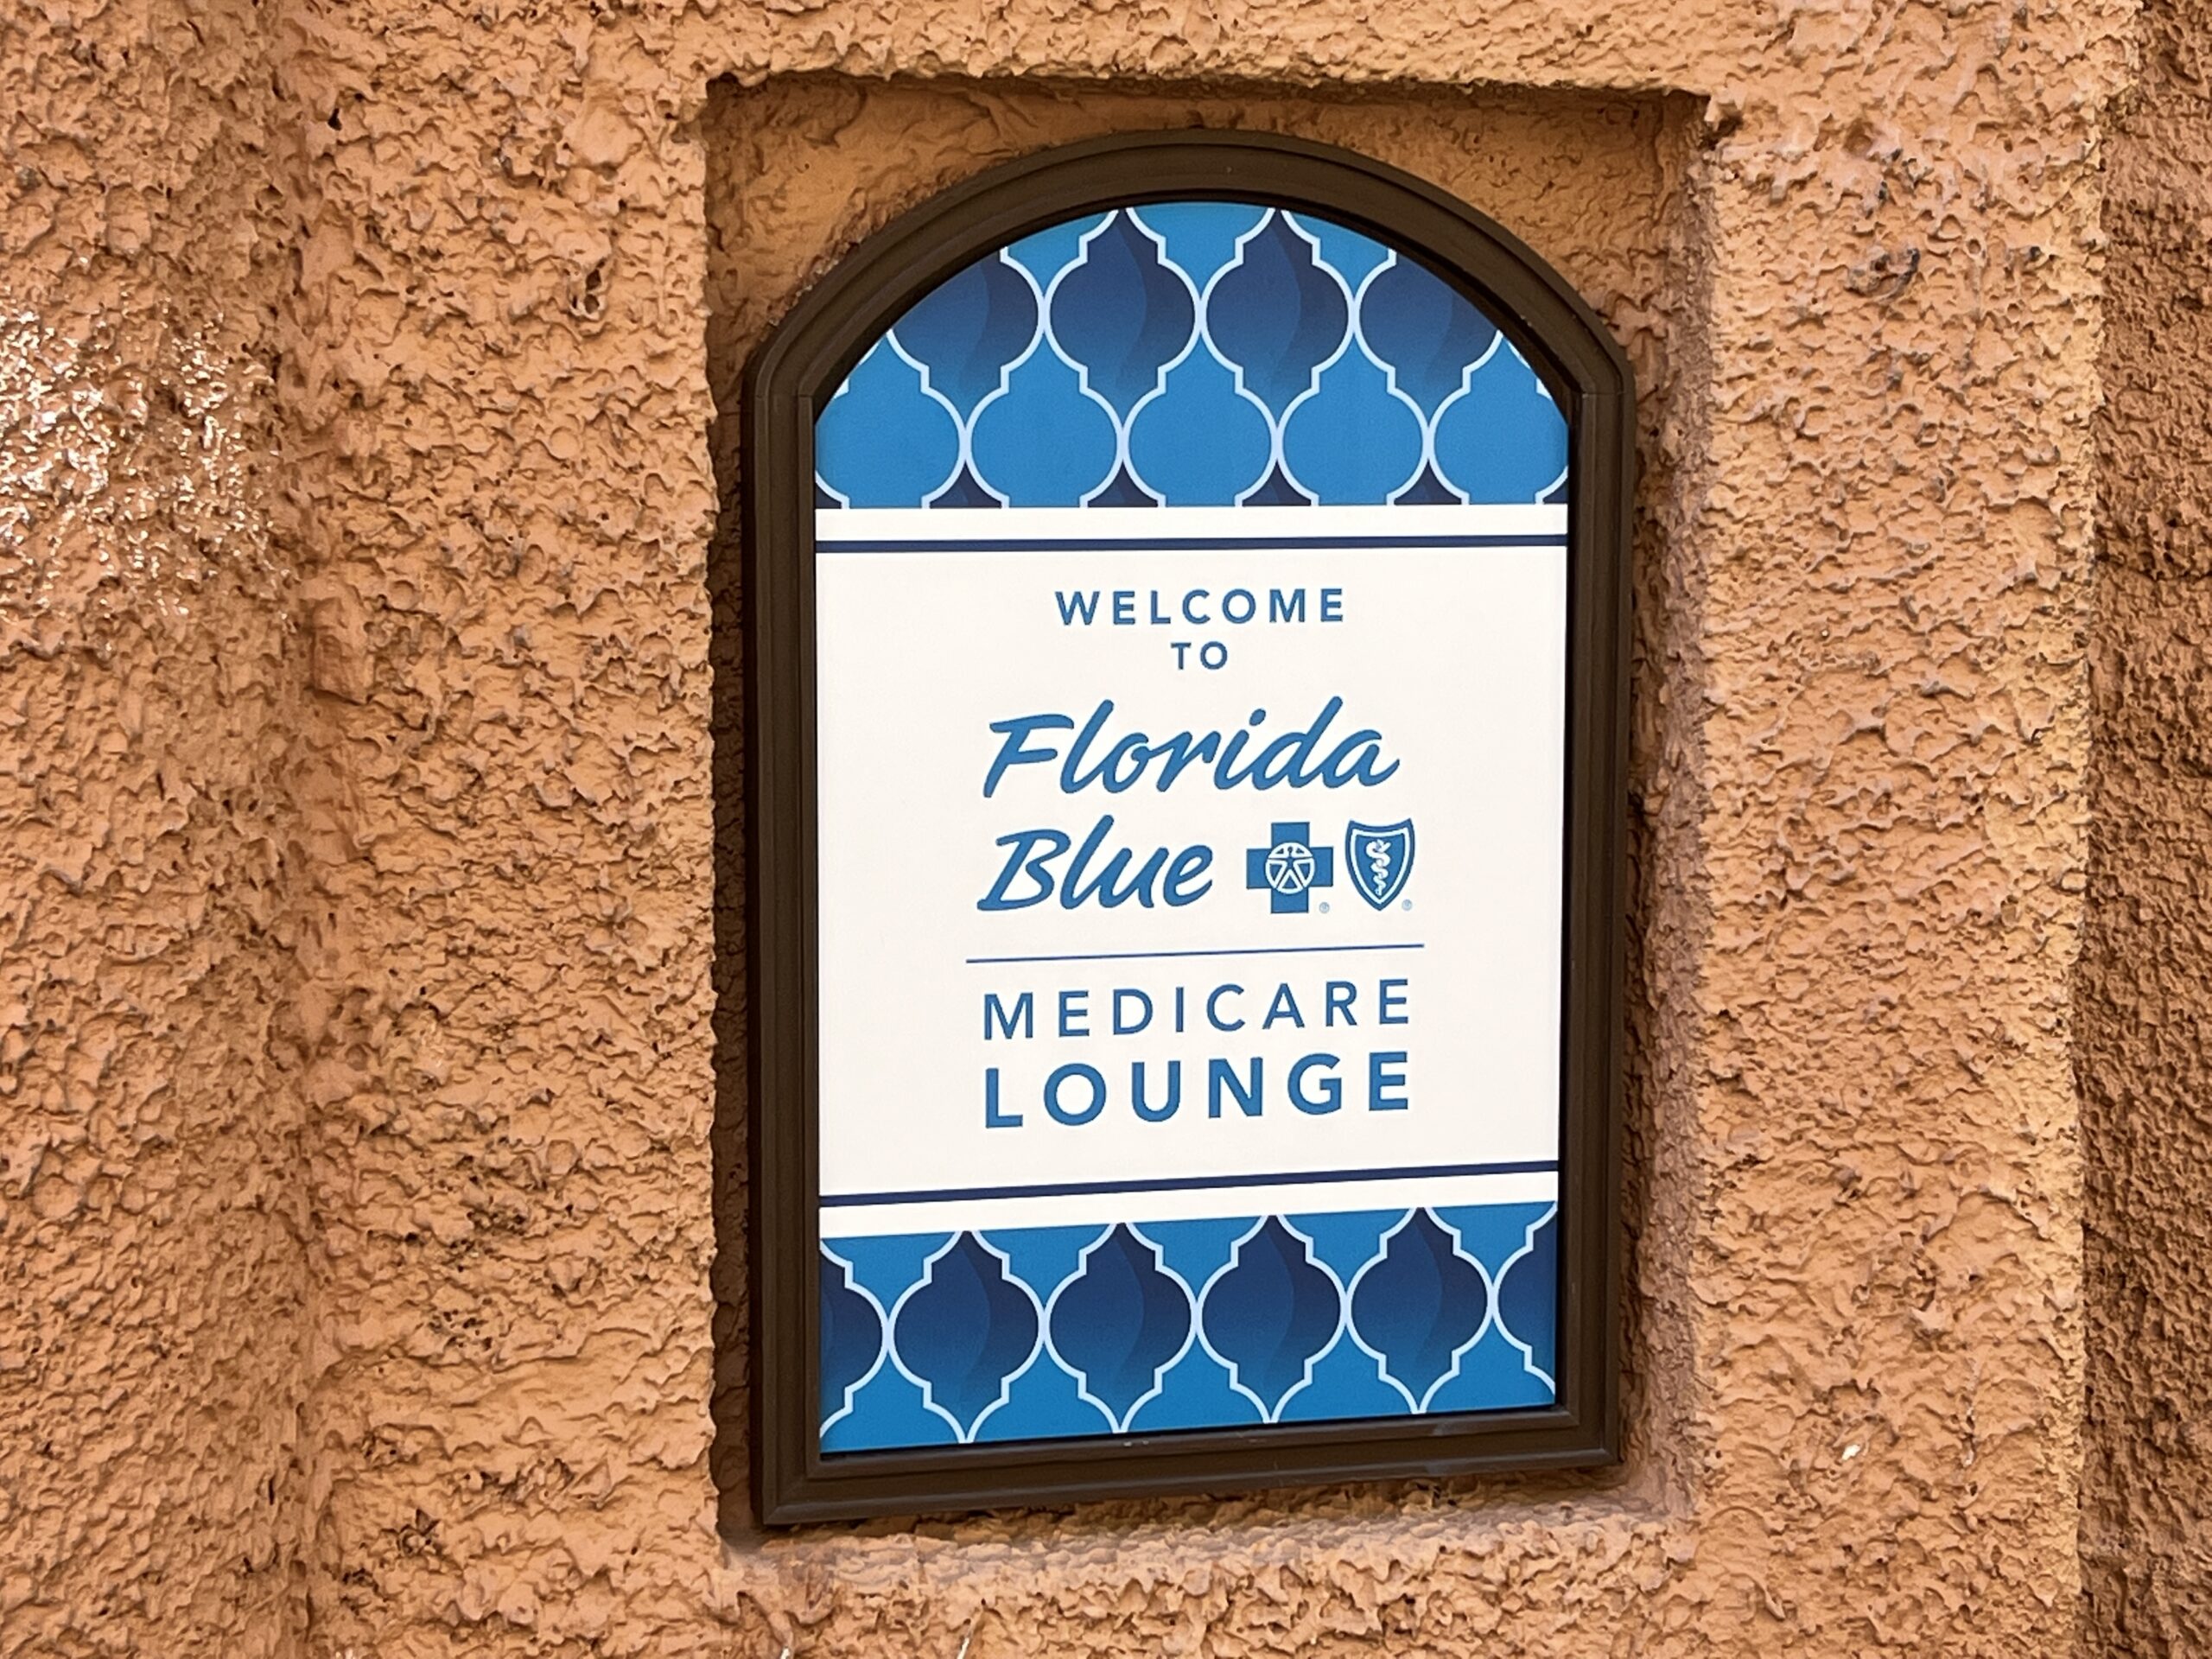 Sunday Savings Series Florida Blue Medicare Lounge Disney Over 50